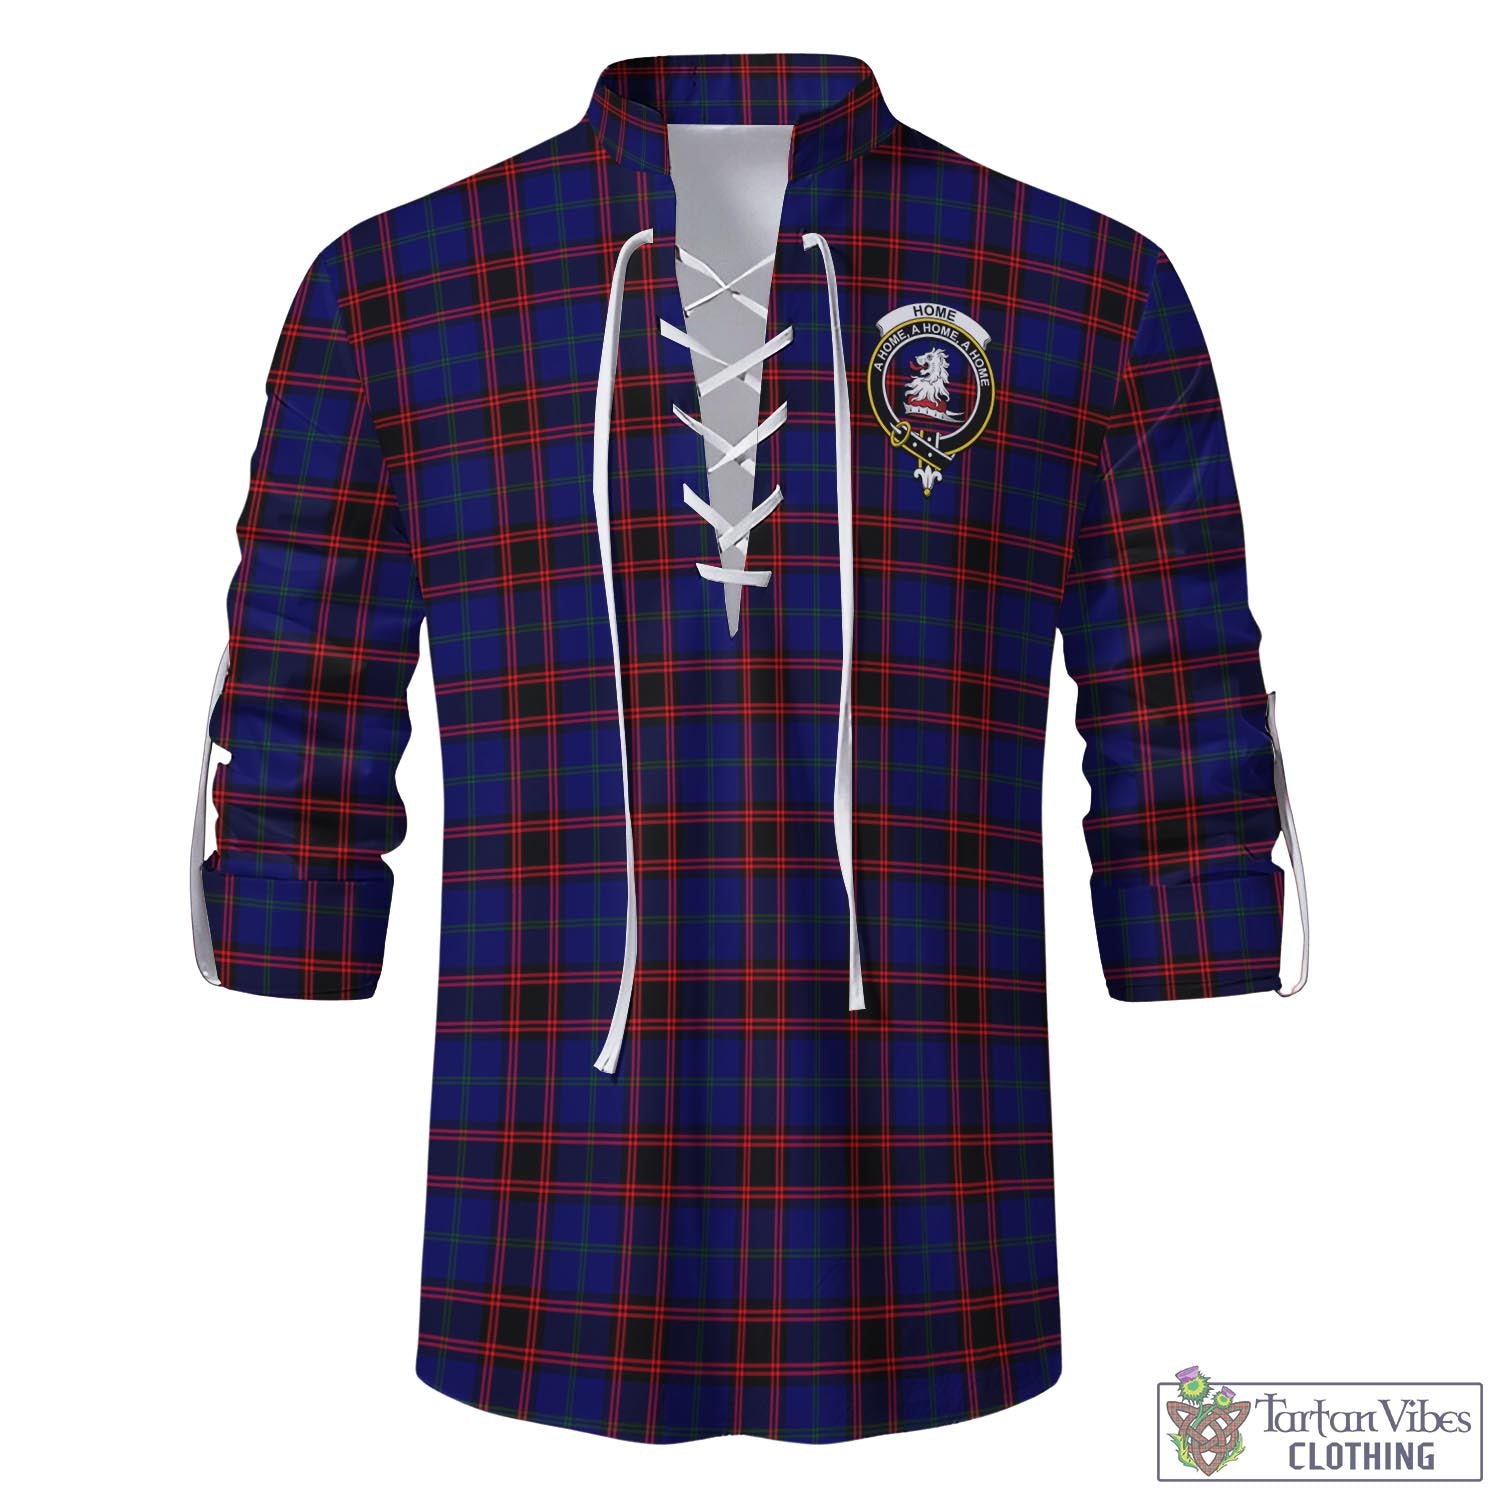 Tartan Vibes Clothing Home Modern Tartan Men's Scottish Traditional Jacobite Ghillie Kilt Shirt with Family Crest